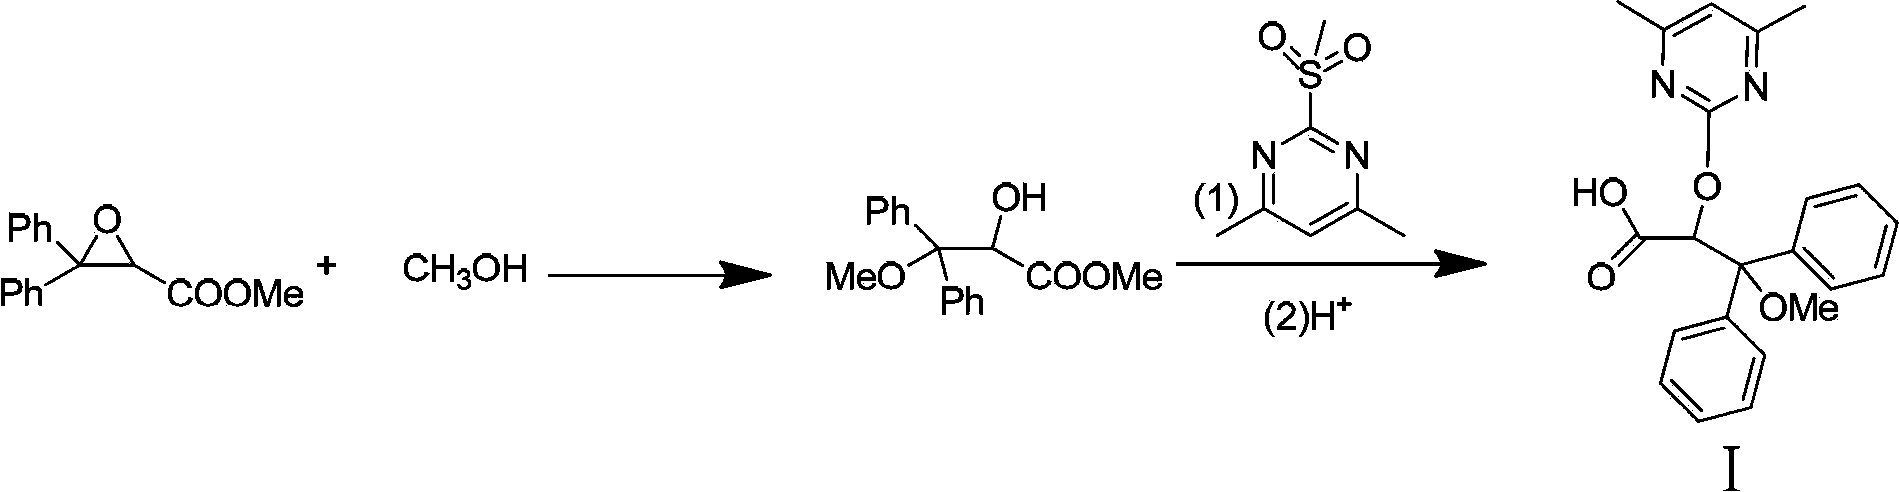 Intermediate compound used for preparing Ambrisentan, preparation method thereof, and preparation of Ambrisentan